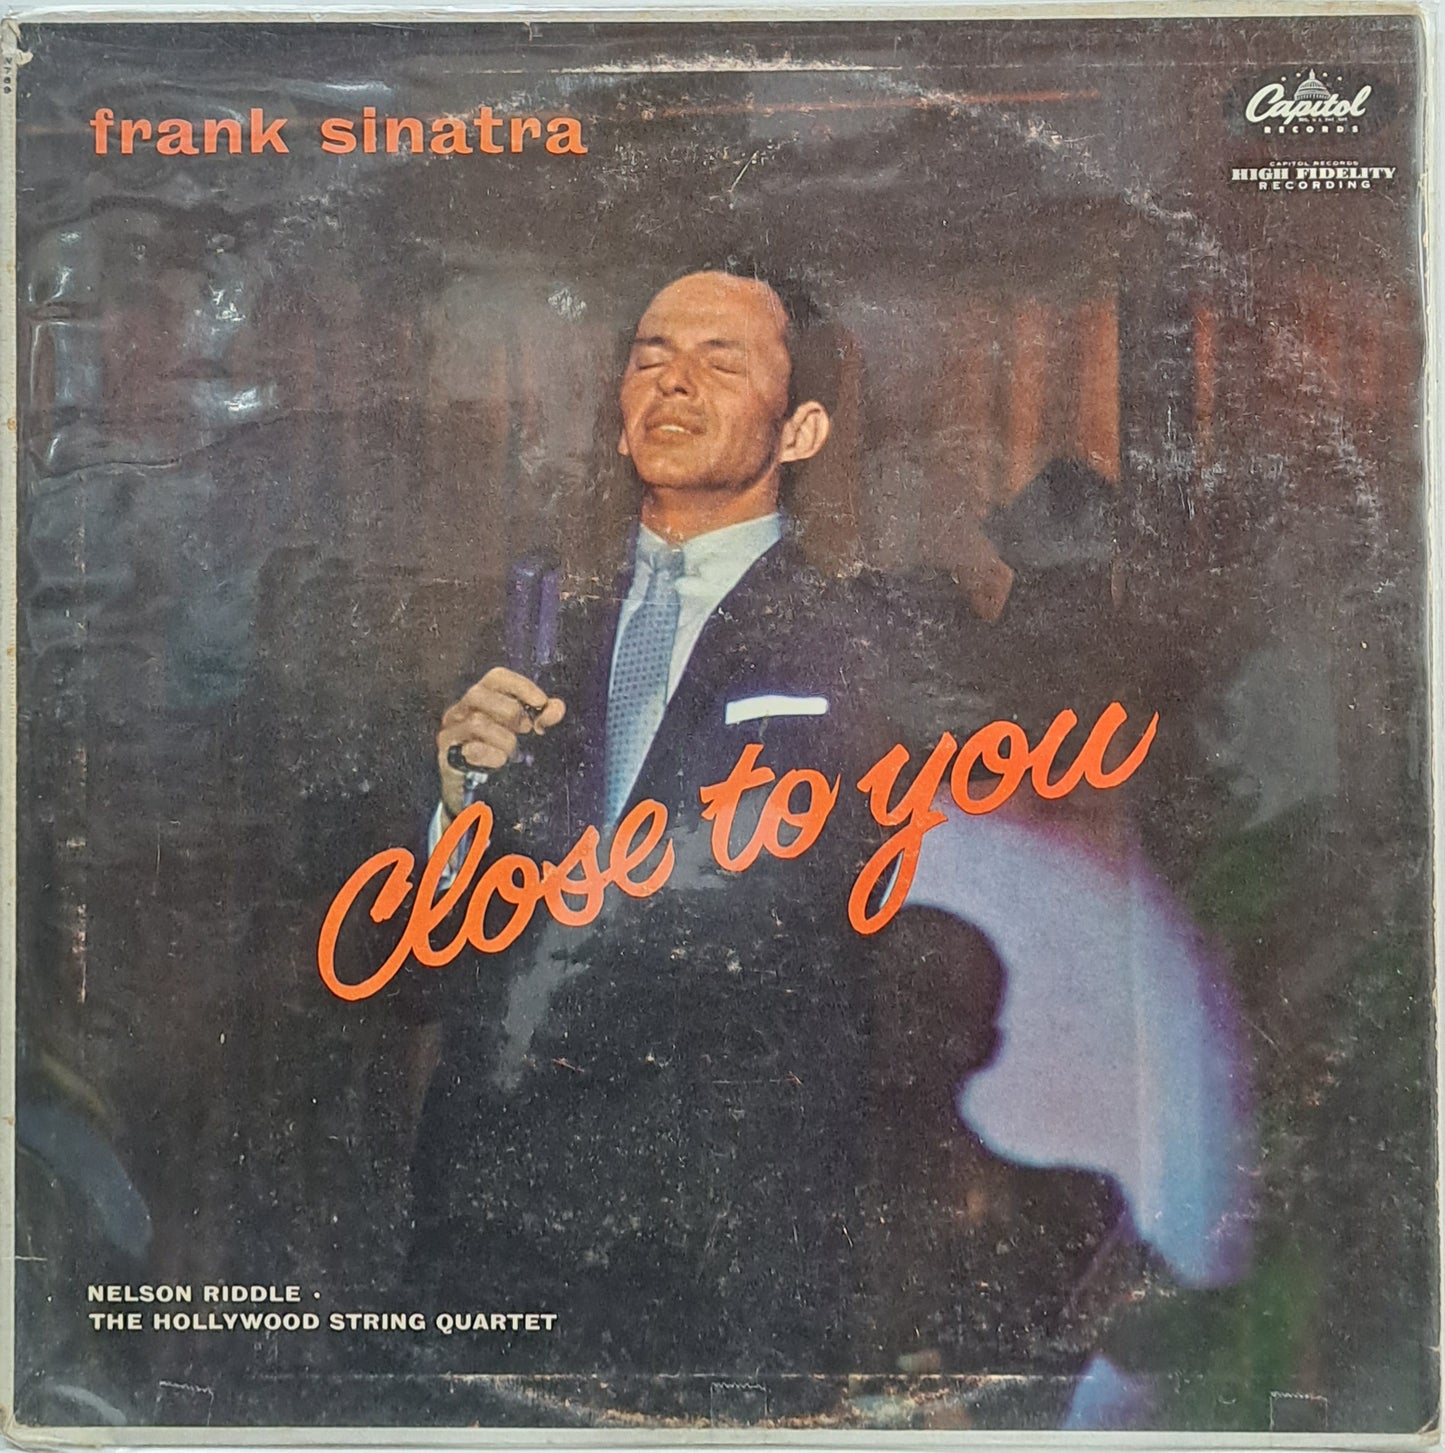 FRANK SINATRA - CLOSE TO YOU LP